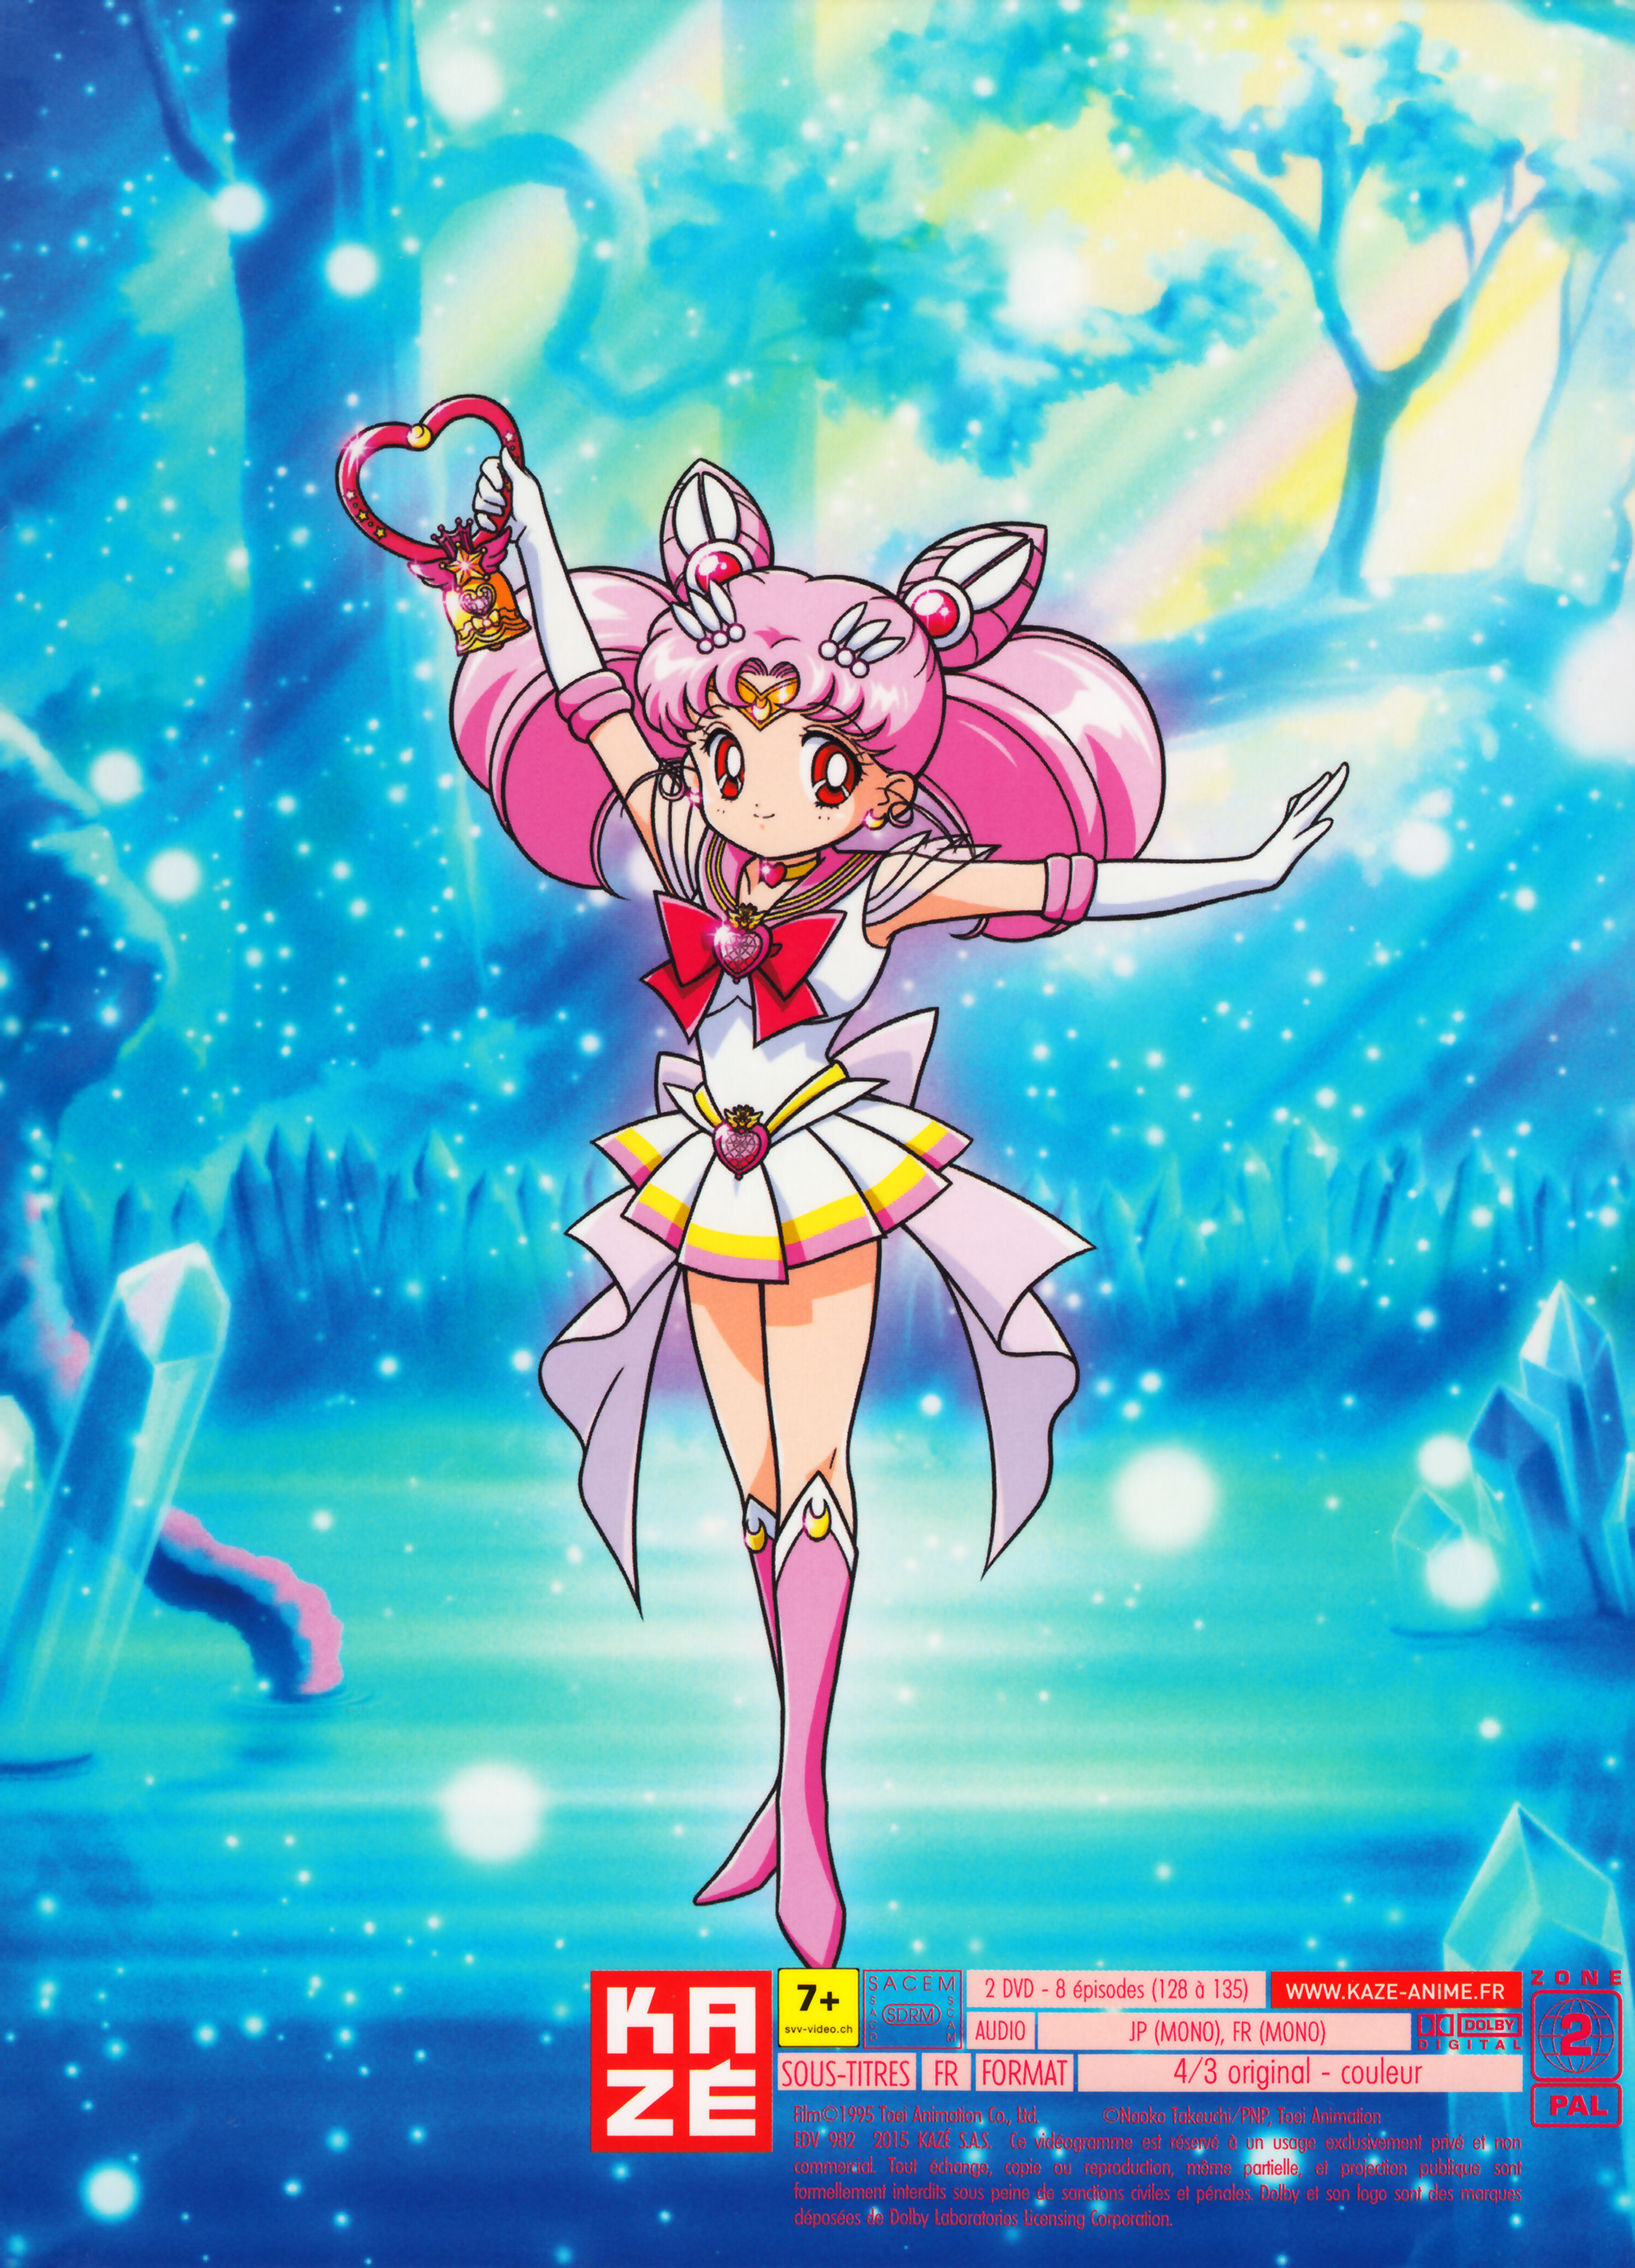 Bishoujo Senshi Sailor Moon Series Super Sailor Chibi Moon Character wallpaperx2775